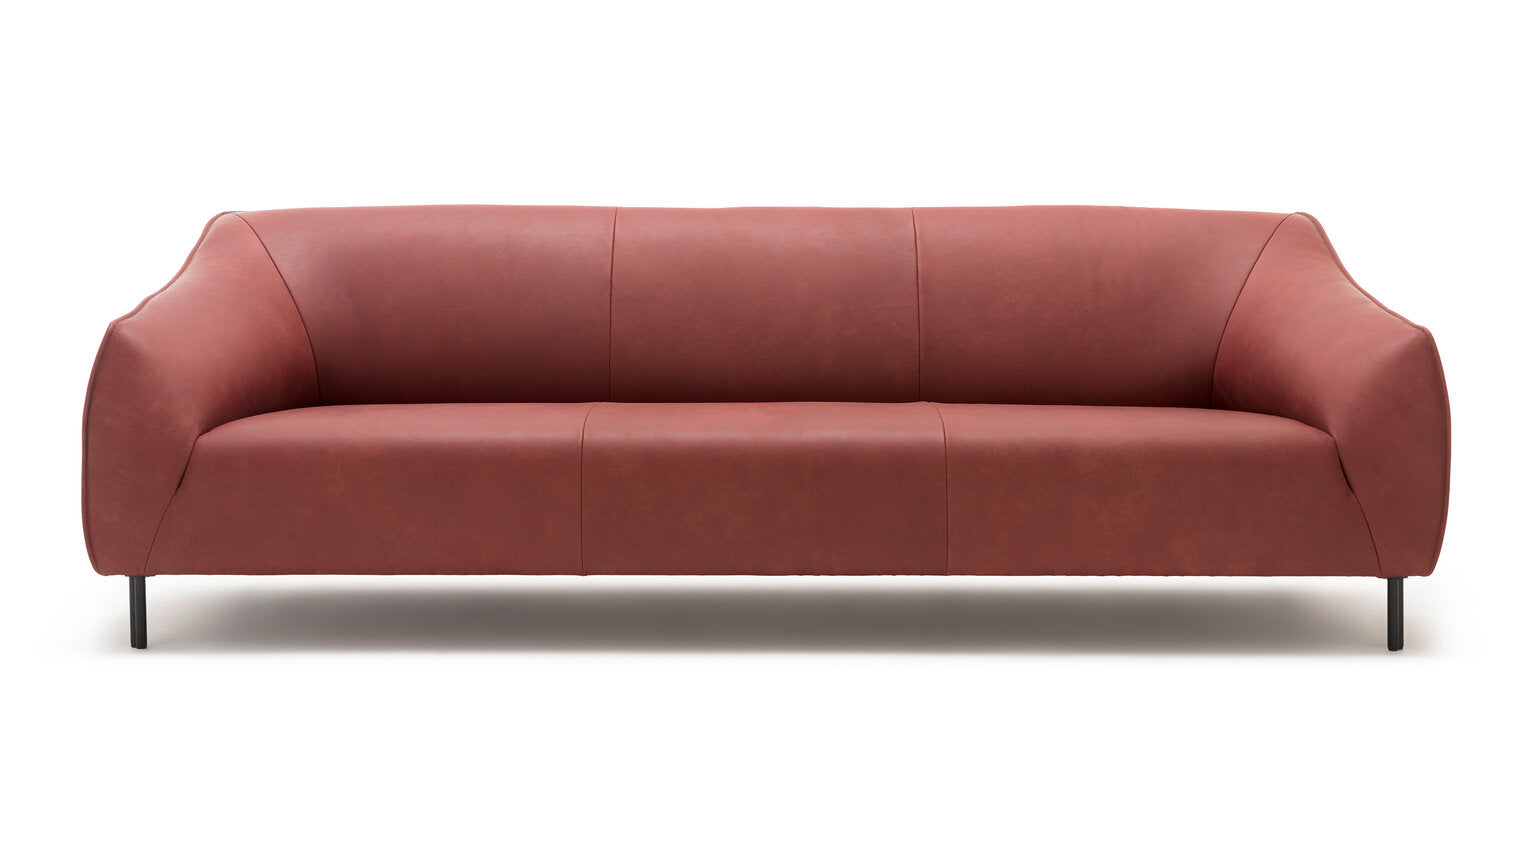 Freistil Rolf Benz 132 sofa red leather